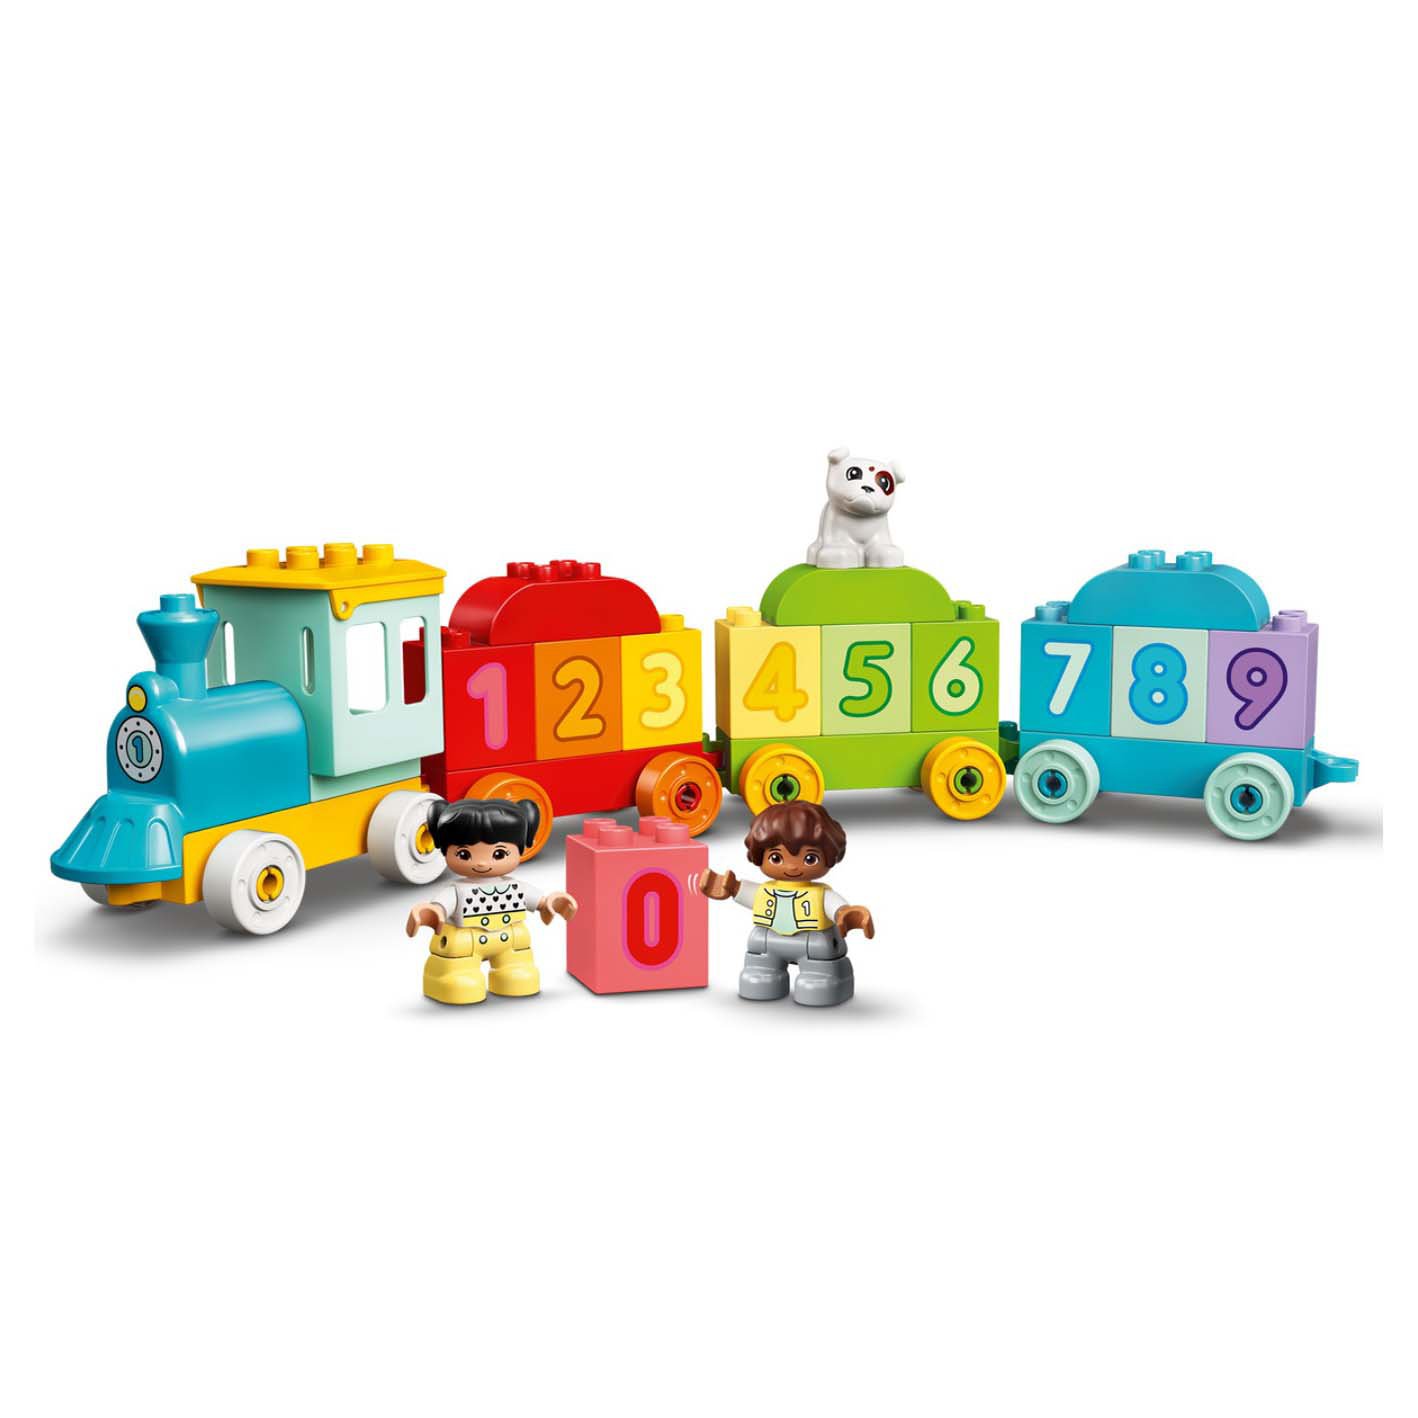 LEGO Duplo Animal Train Set - Shop Lego & Building Blocks at H-E-B